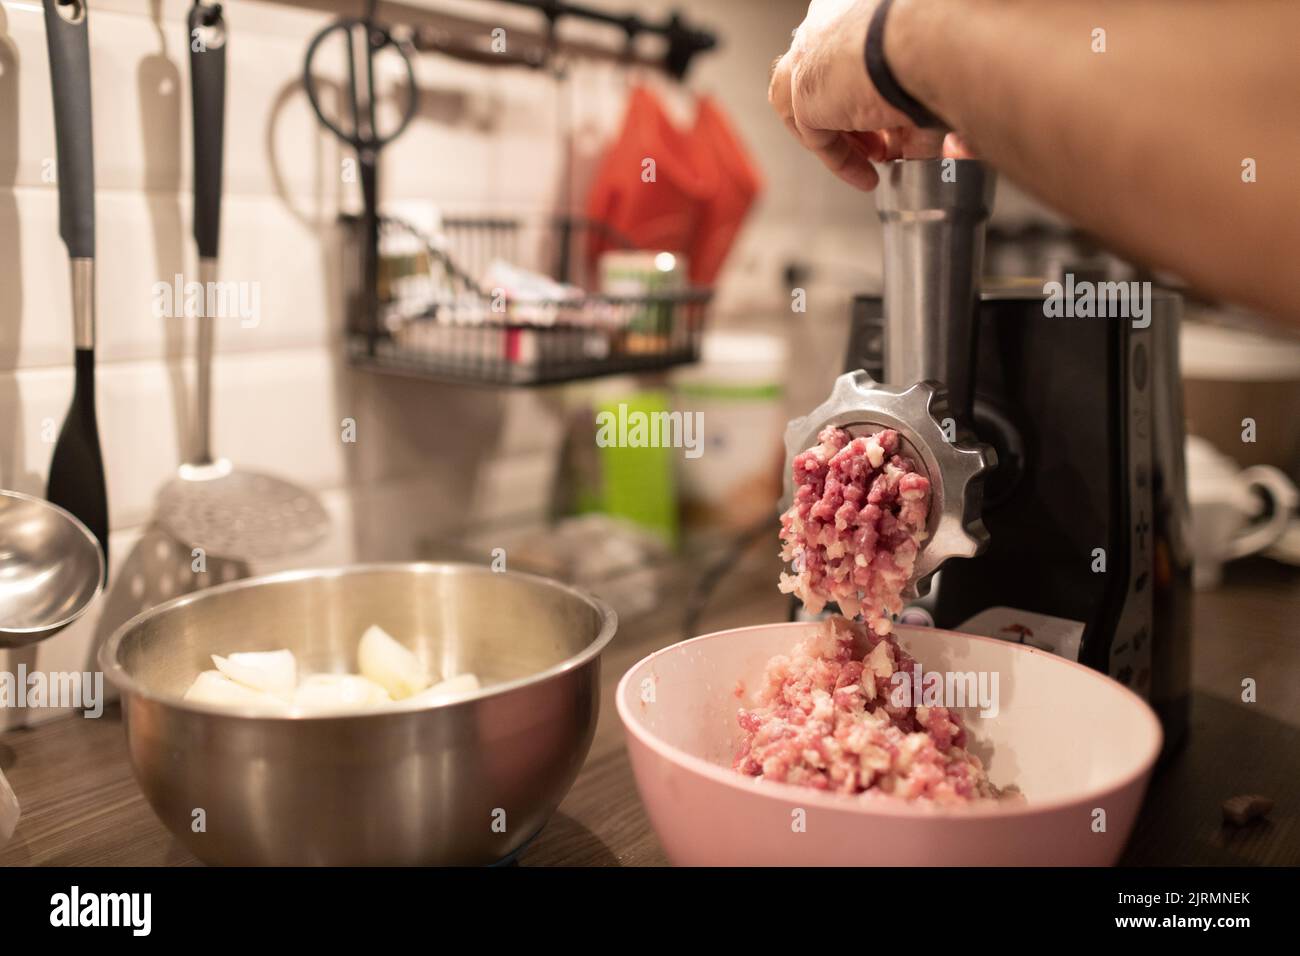 https://c8.alamy.com/comp/2JRMNEK/mincer-machine-with-fresh-chopped-meat-at-home-kitchen-preparing-ground-meat-male-hands-closeup-2JRMNEK.jpg